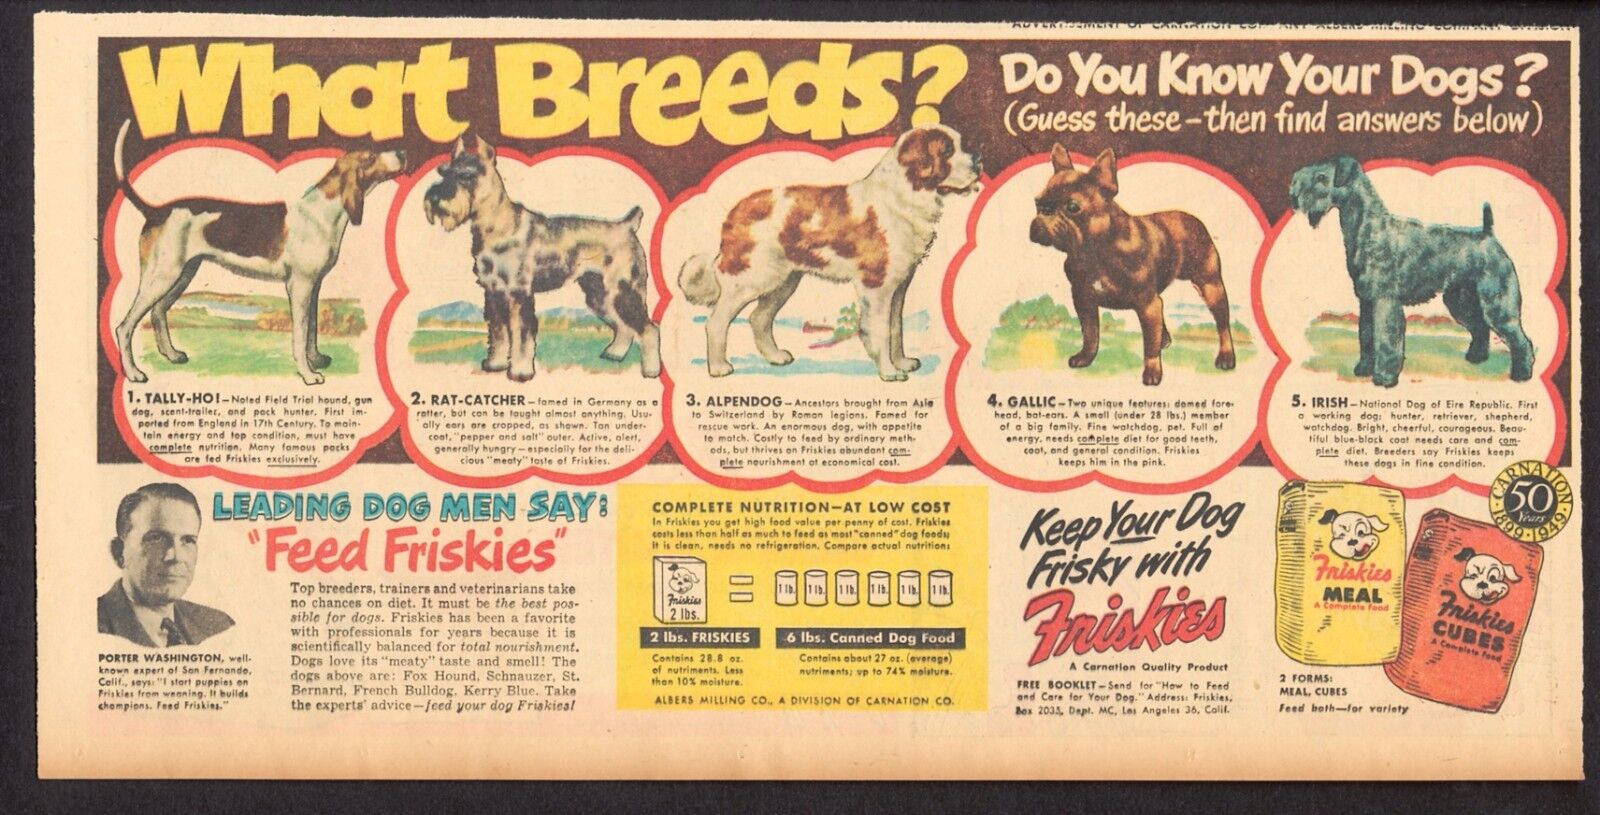 1949 - Friskies Dog Food Ad - What Breeds? - Fox Hound, Schnauzer, Kerry Blue